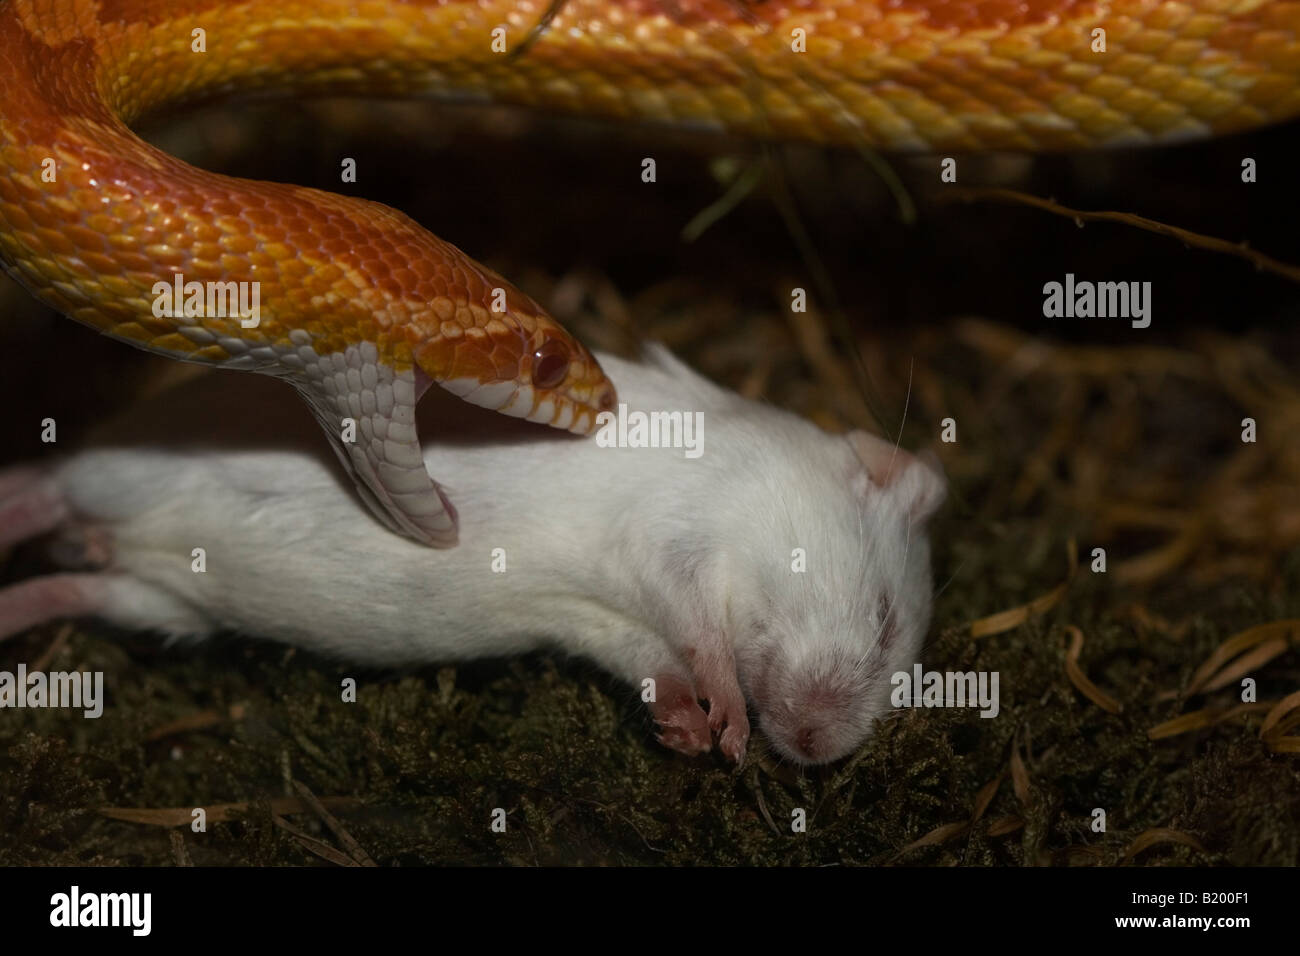 Corn snake feeding on mouse Stock Photo